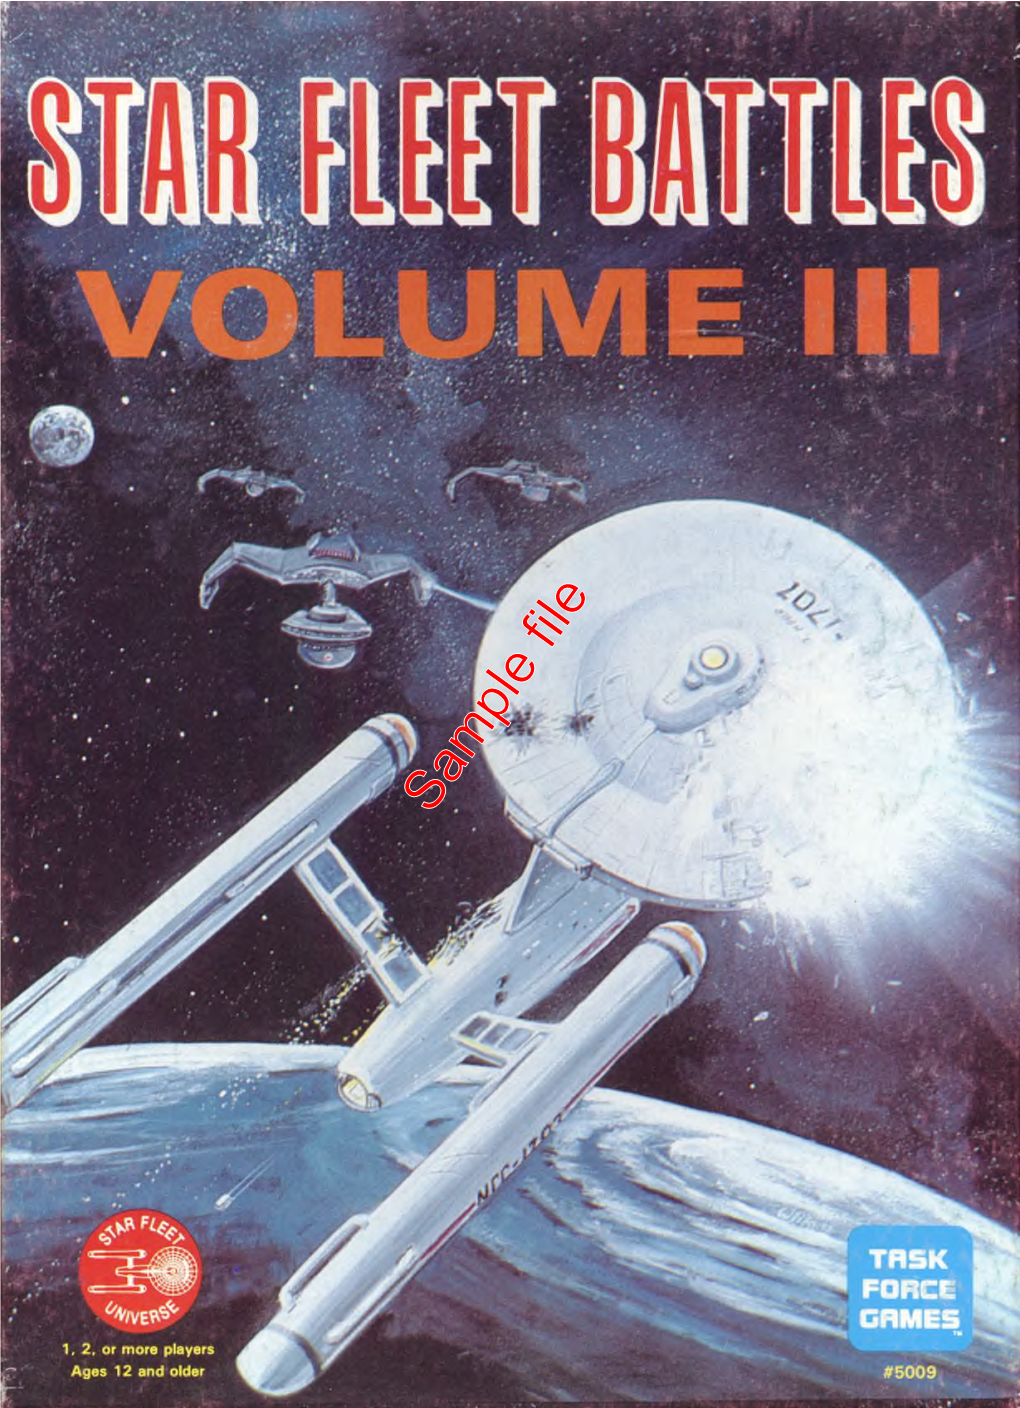 Star Fleet Battles Commander's Rulebook Volume Iii